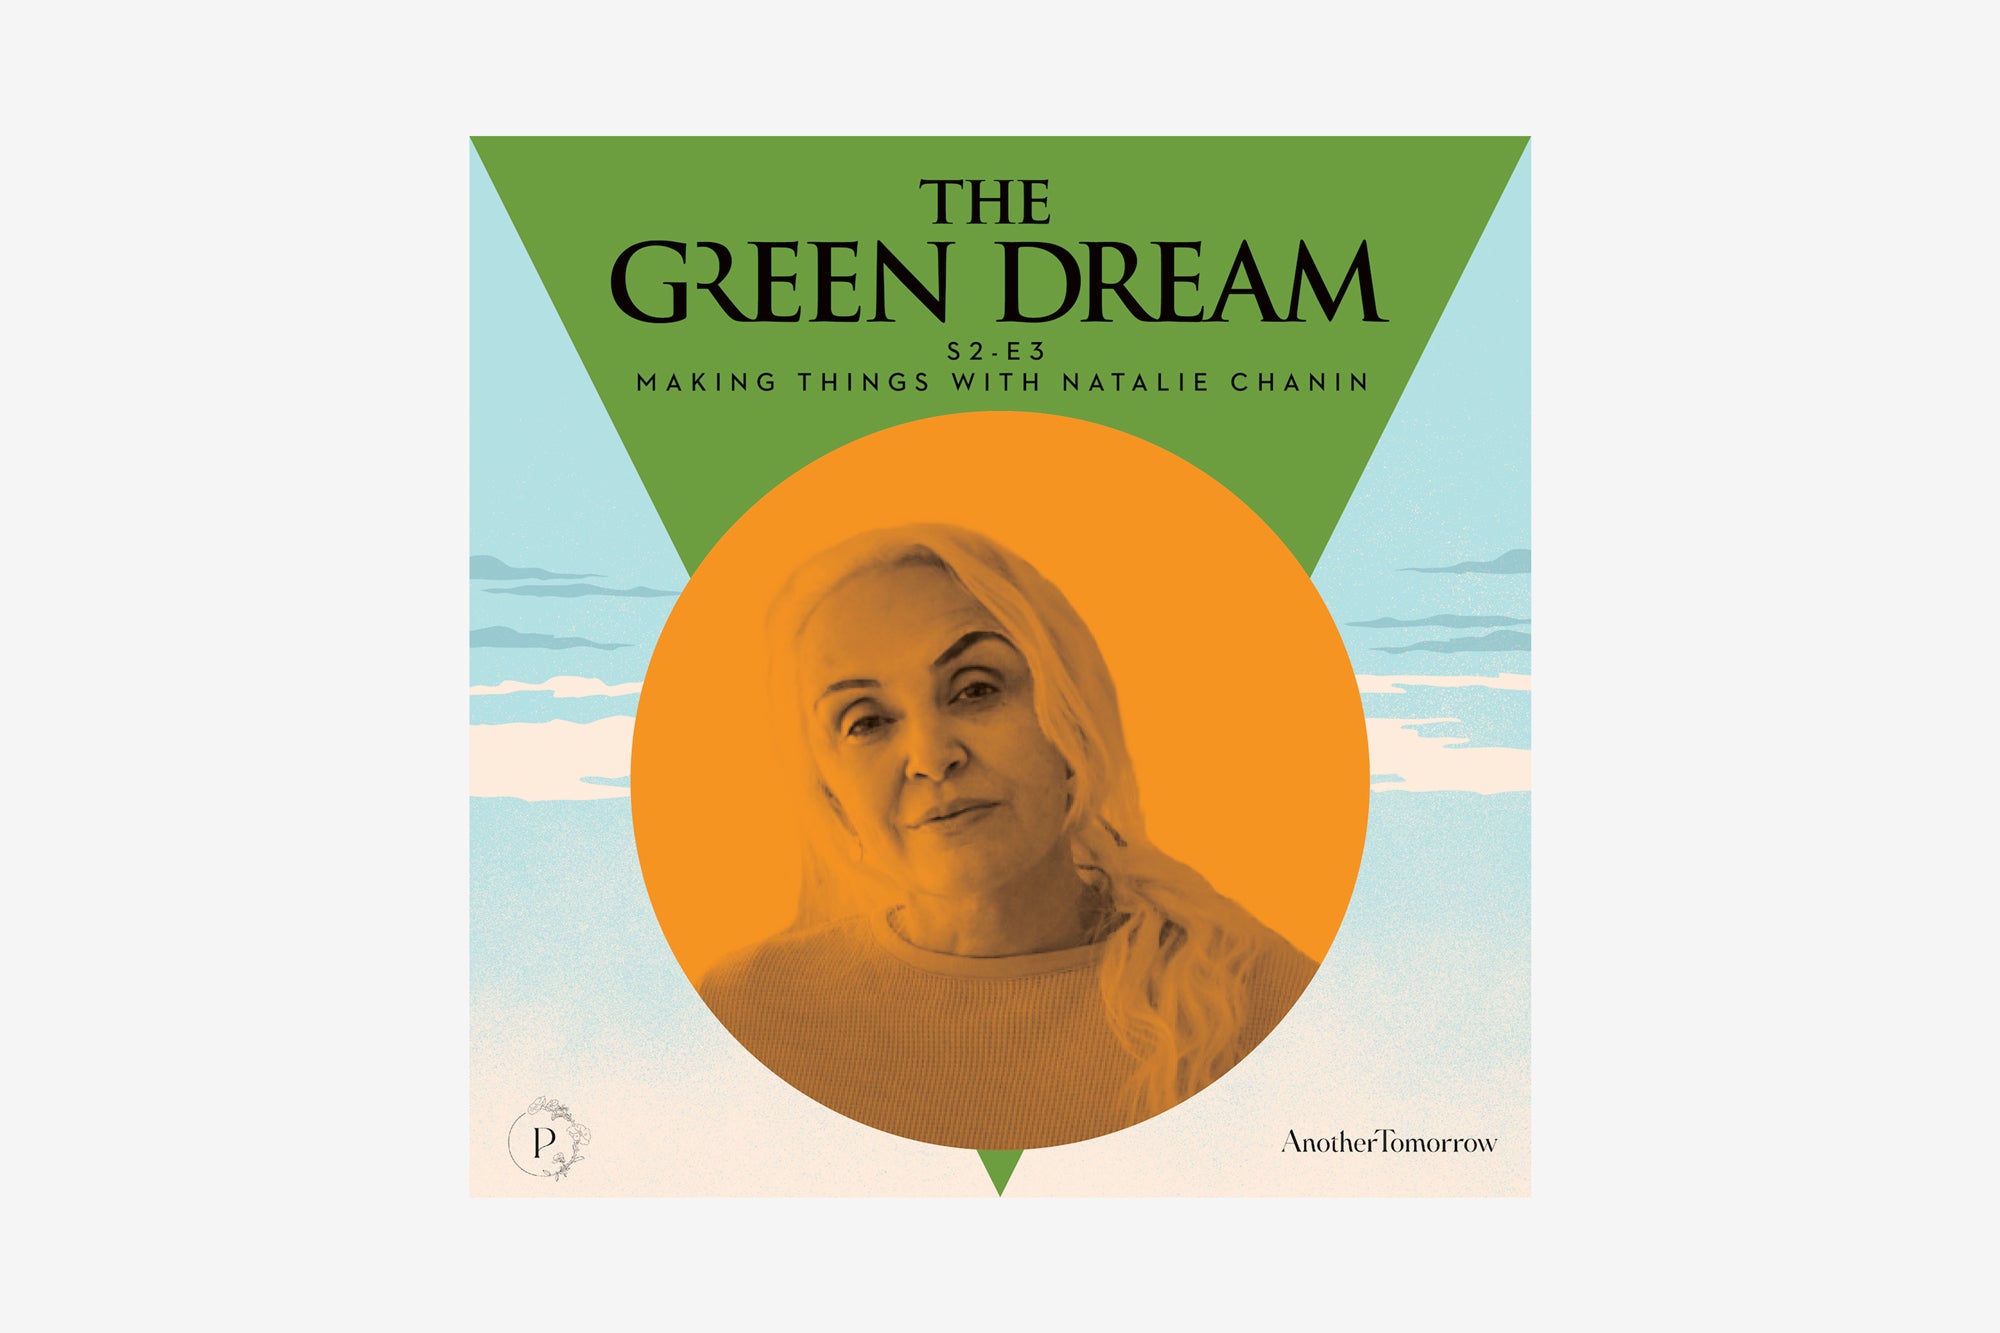 The Green Dream Podcast with Dana Thomas